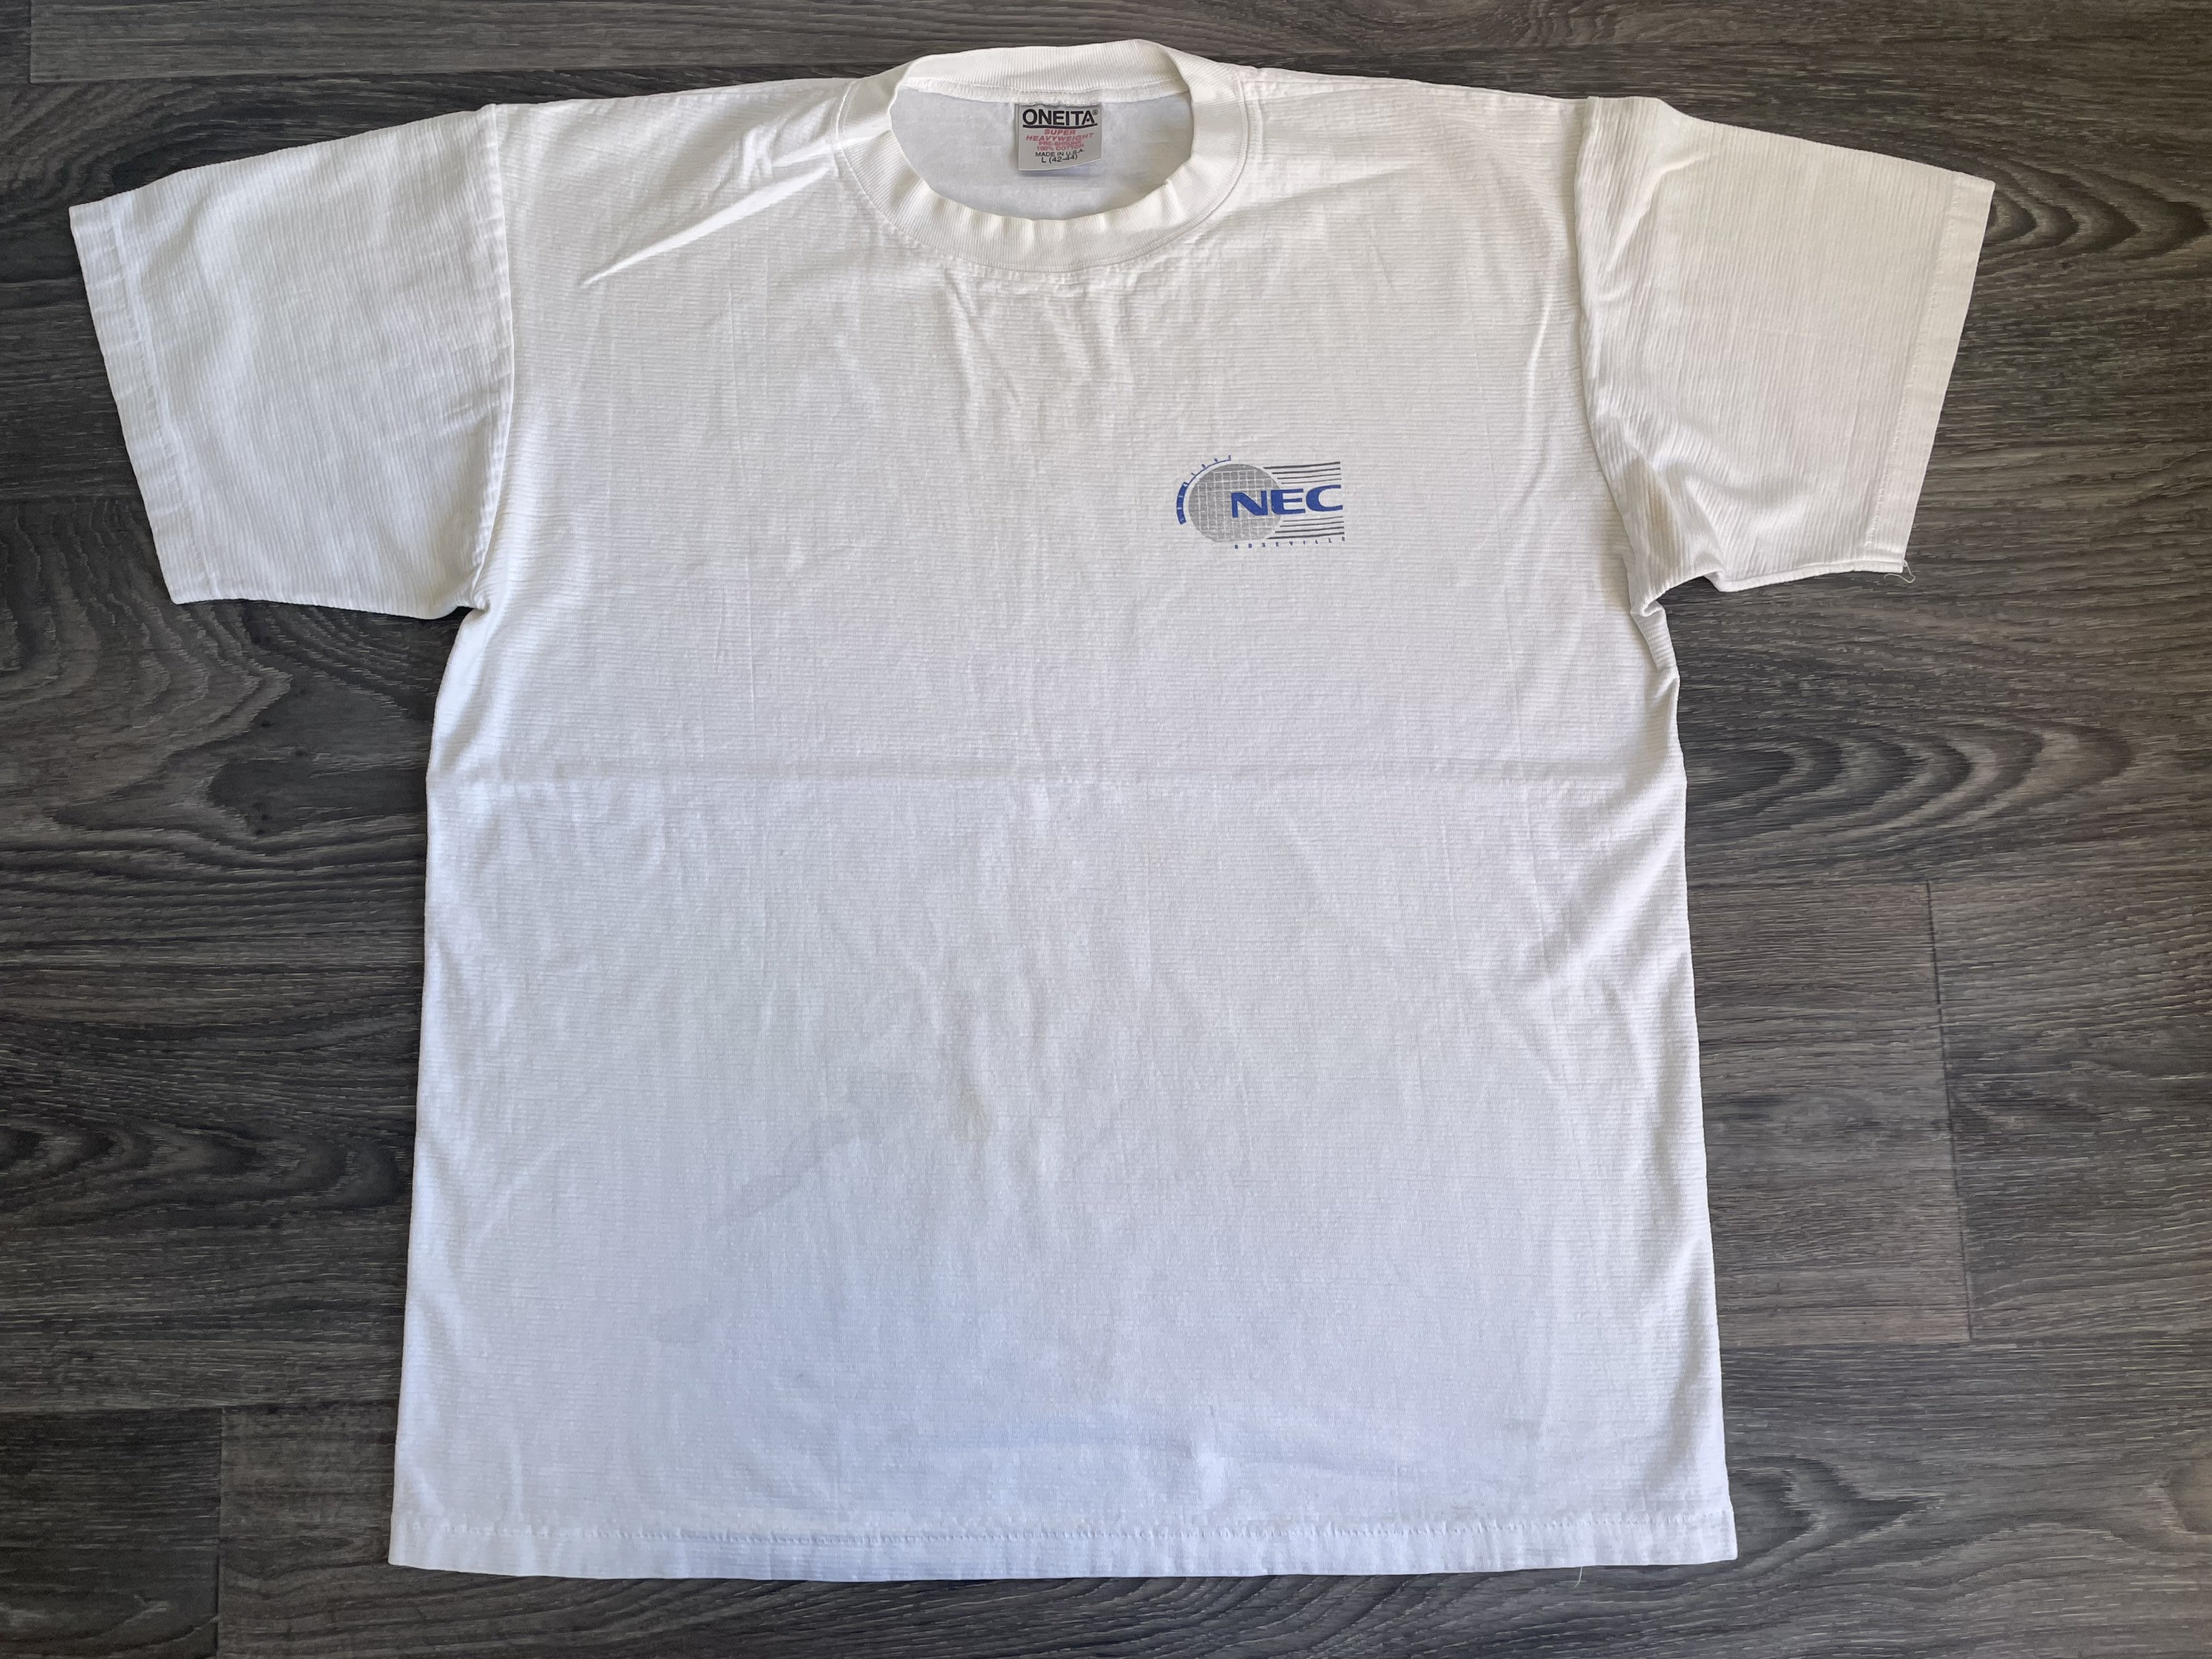 lens afgunst Tips NEC Shirt 90s Vintage 1994 Tech IT Communications Tshirt - Etsy Sweden